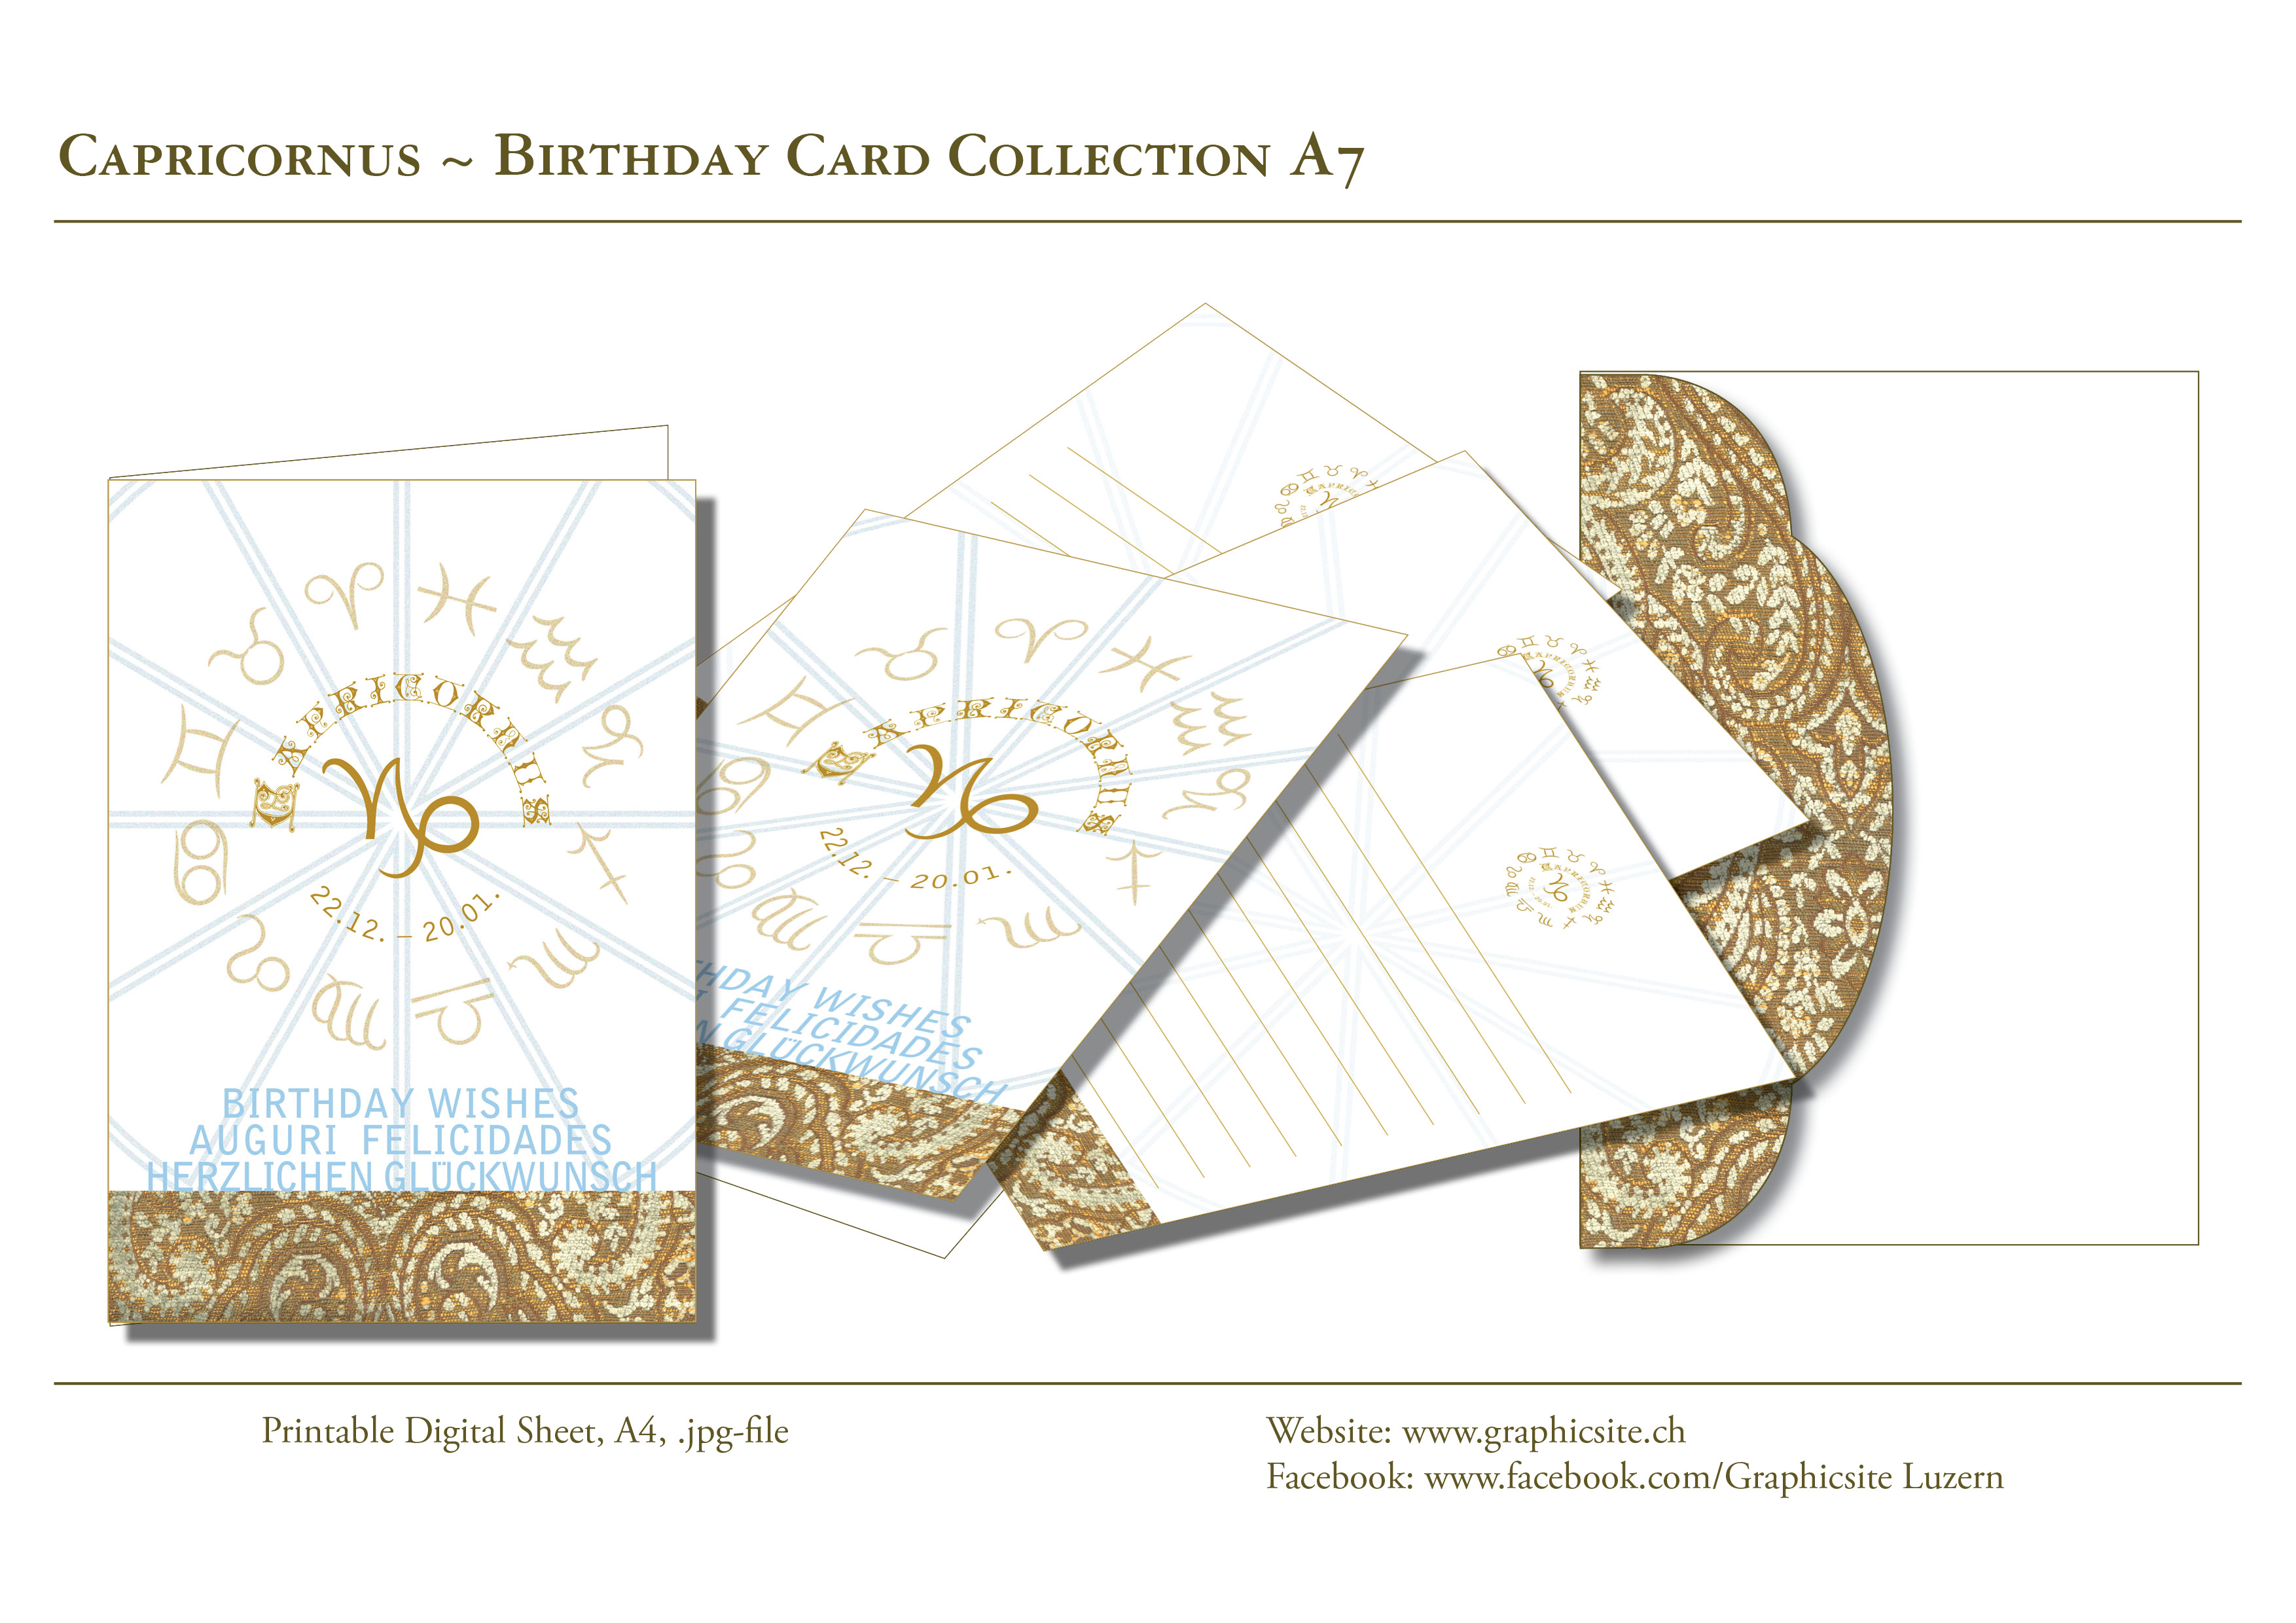 Printable Digital Sheets - Birthday Card Collection - Horoscope - Zodiac - Capricornus A7 - GraphicDesign, Luzern